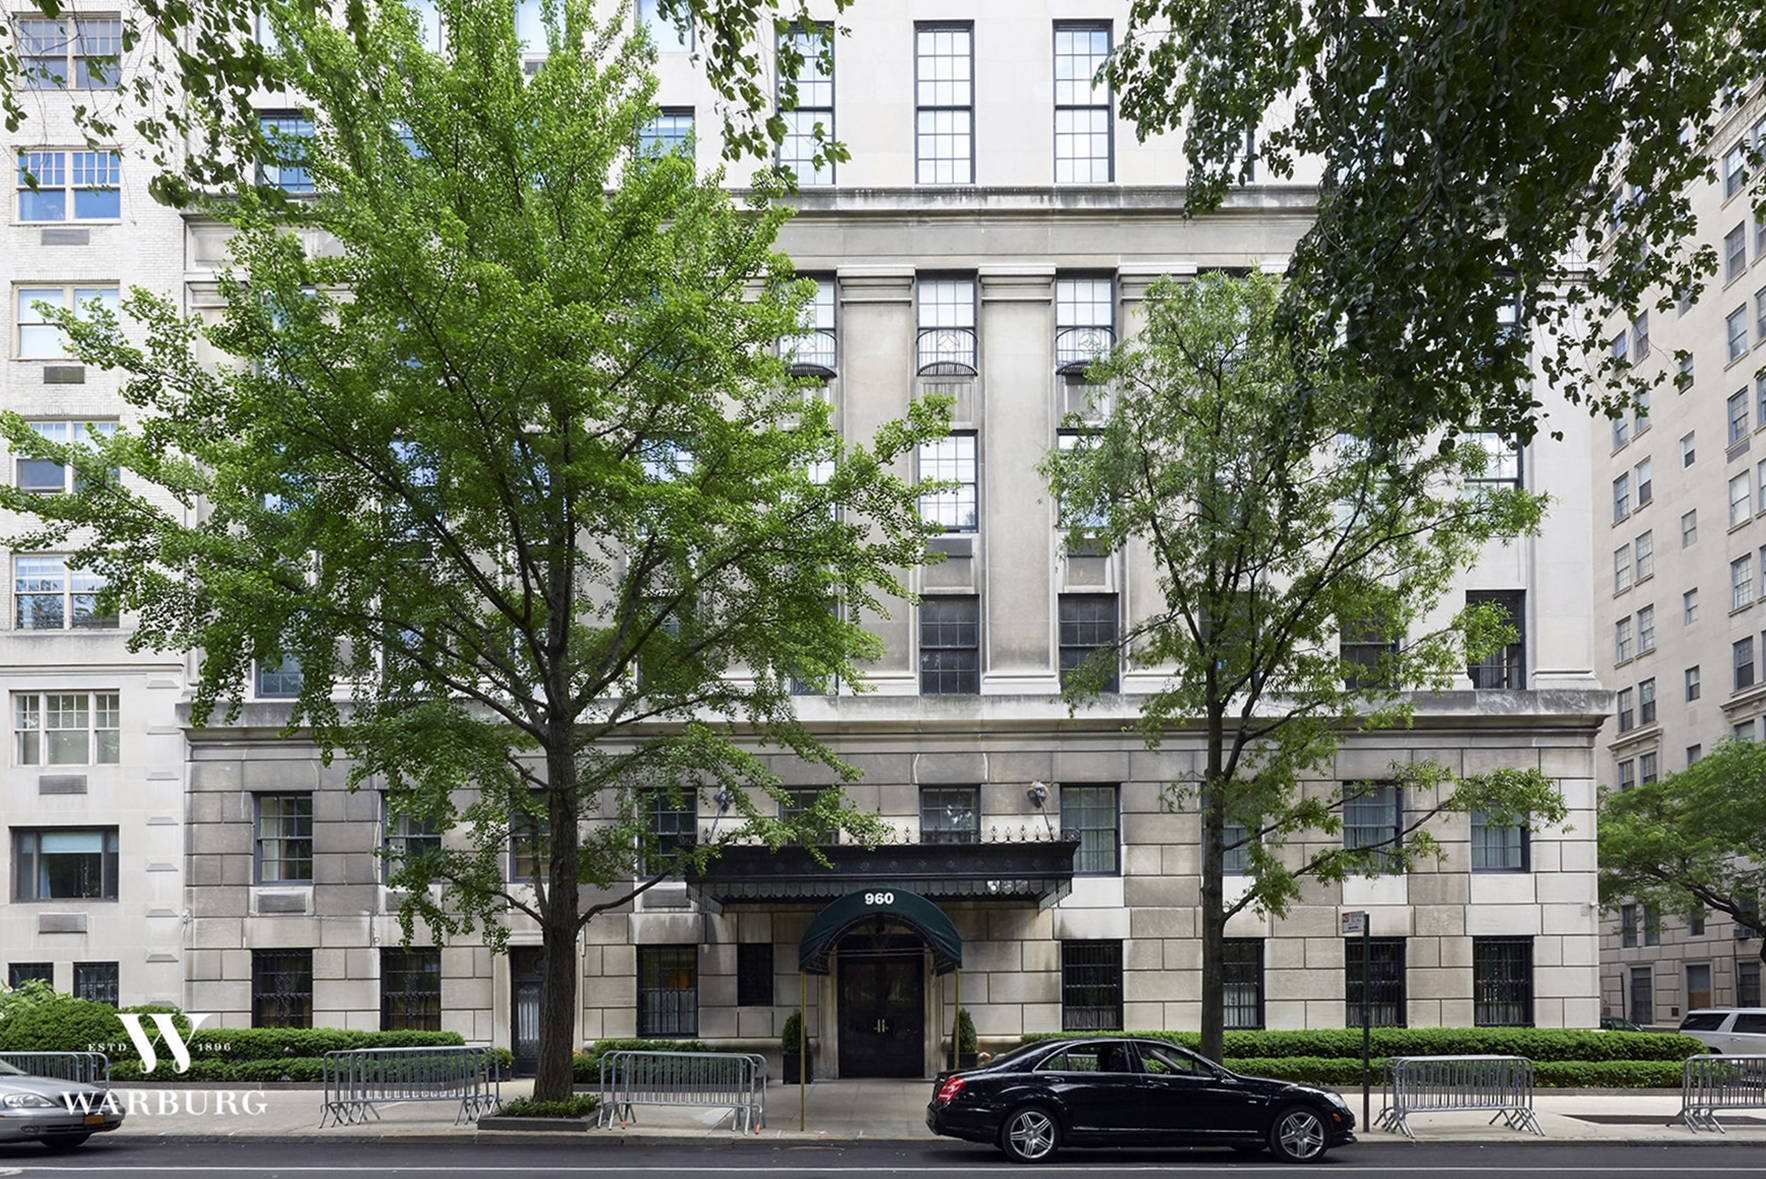 960 5th Avenue 坐落在第五大道、东77街的东北角，是纽约著名的A+级建筑。